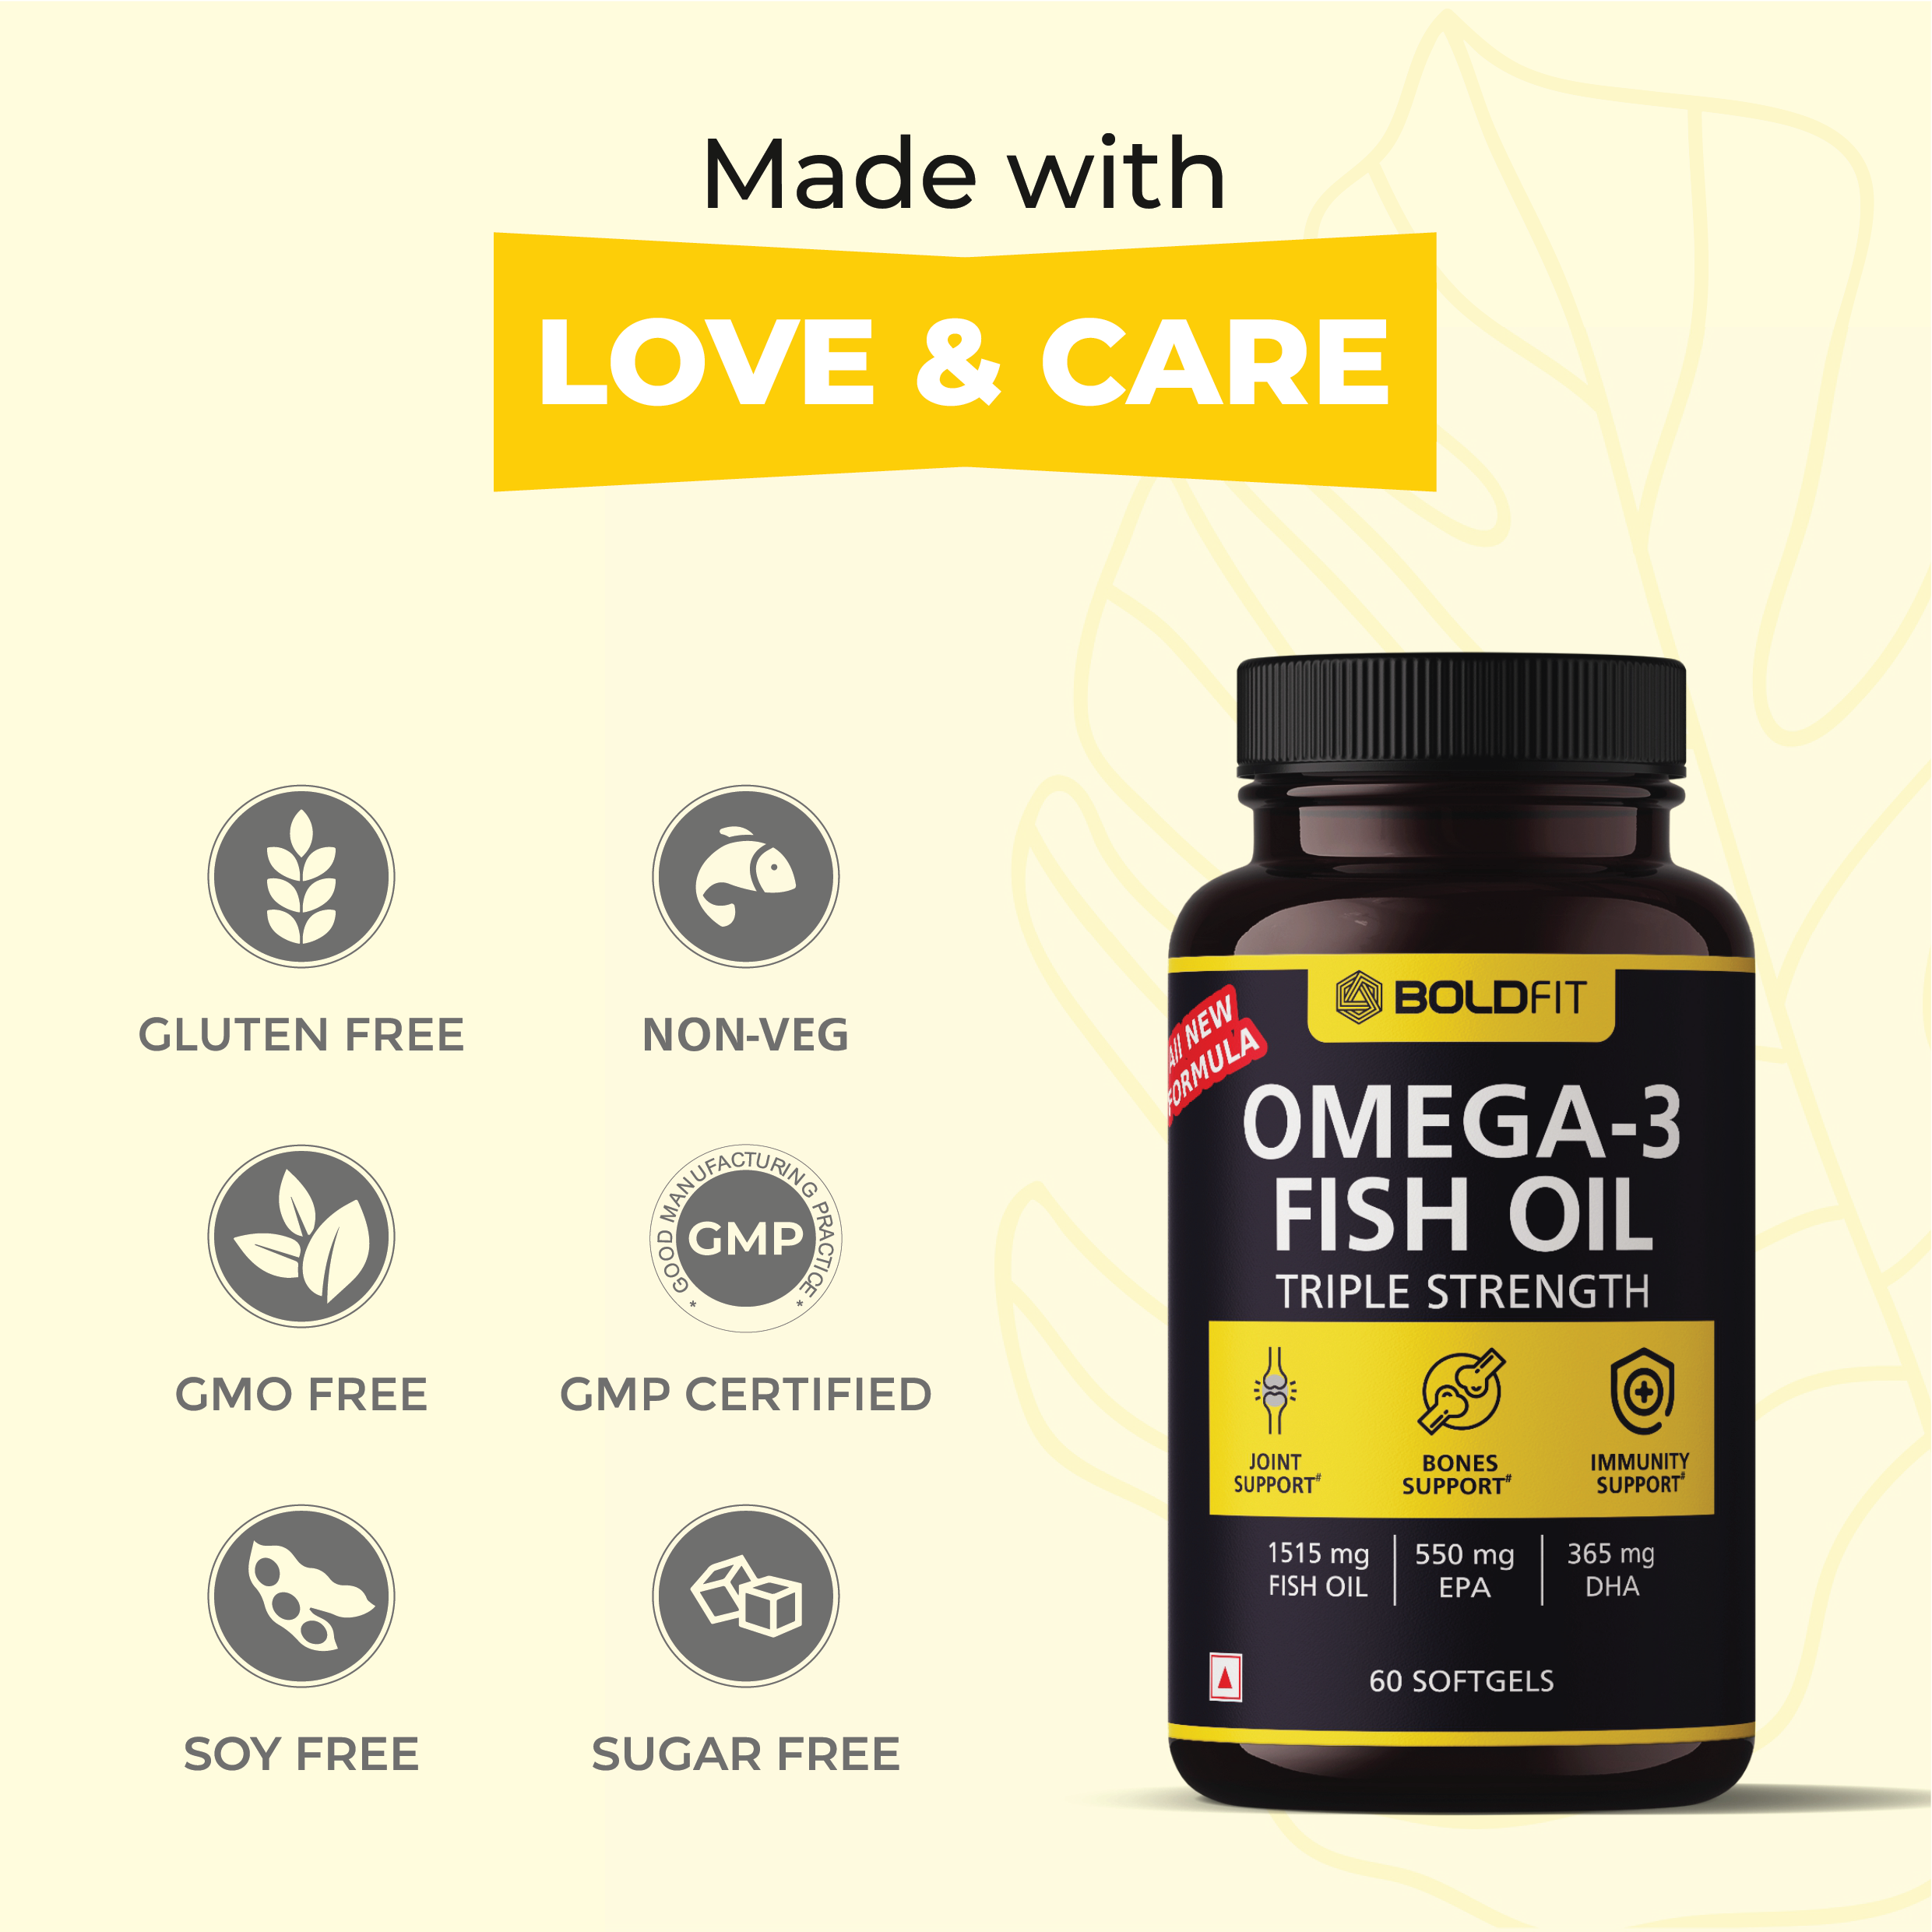 Boldfit Omega 3 Fish Oil Capsules for men and women